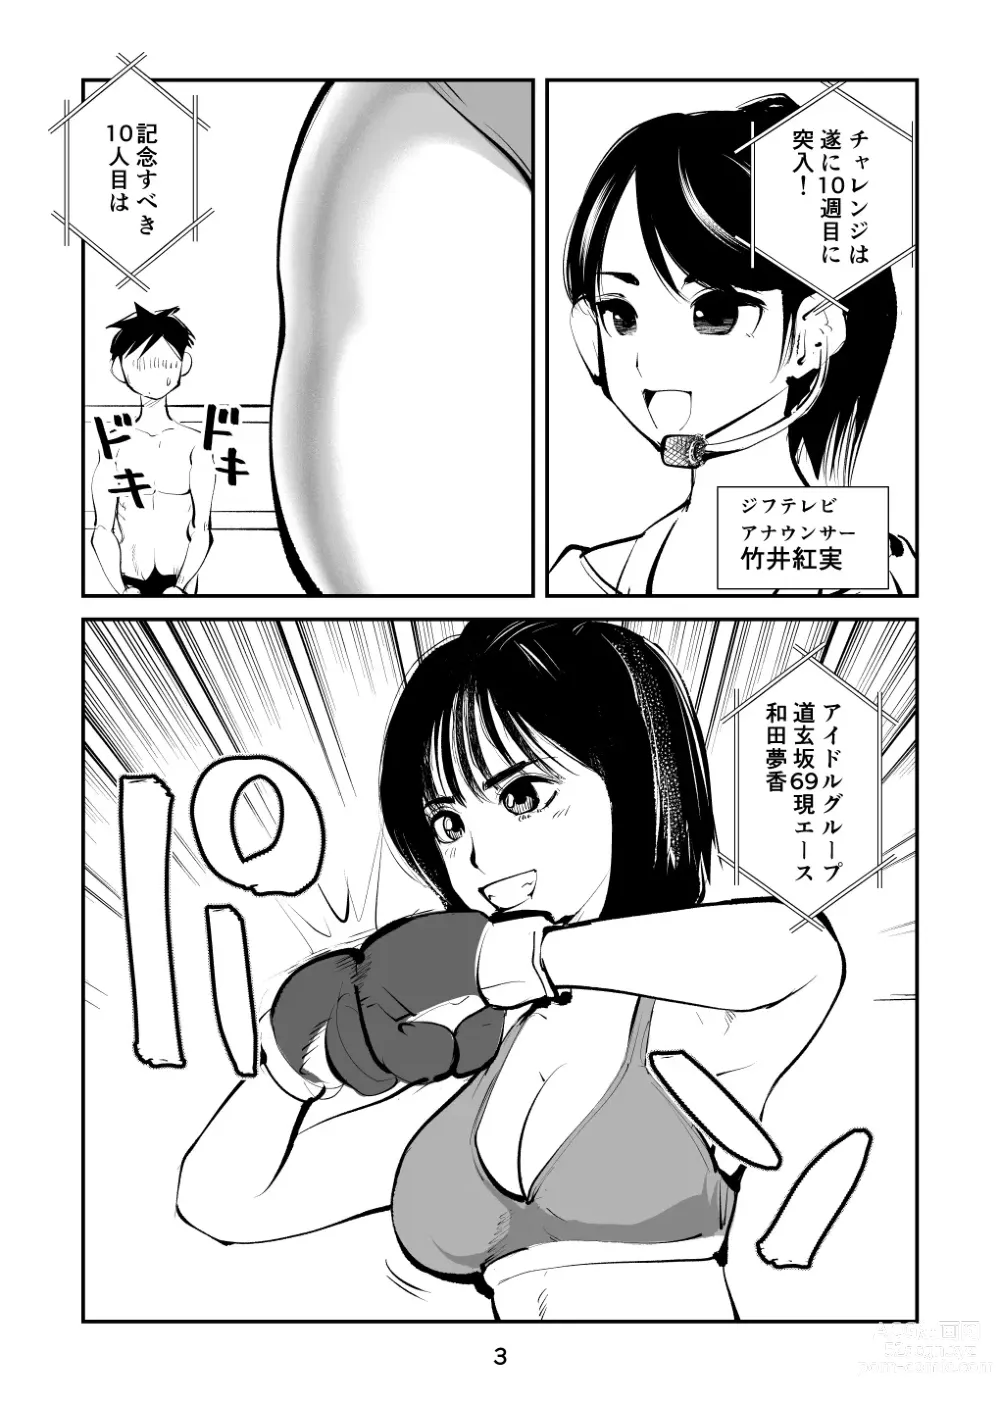 Page 3 of doujinshi Maso Boko Kickboxing 2